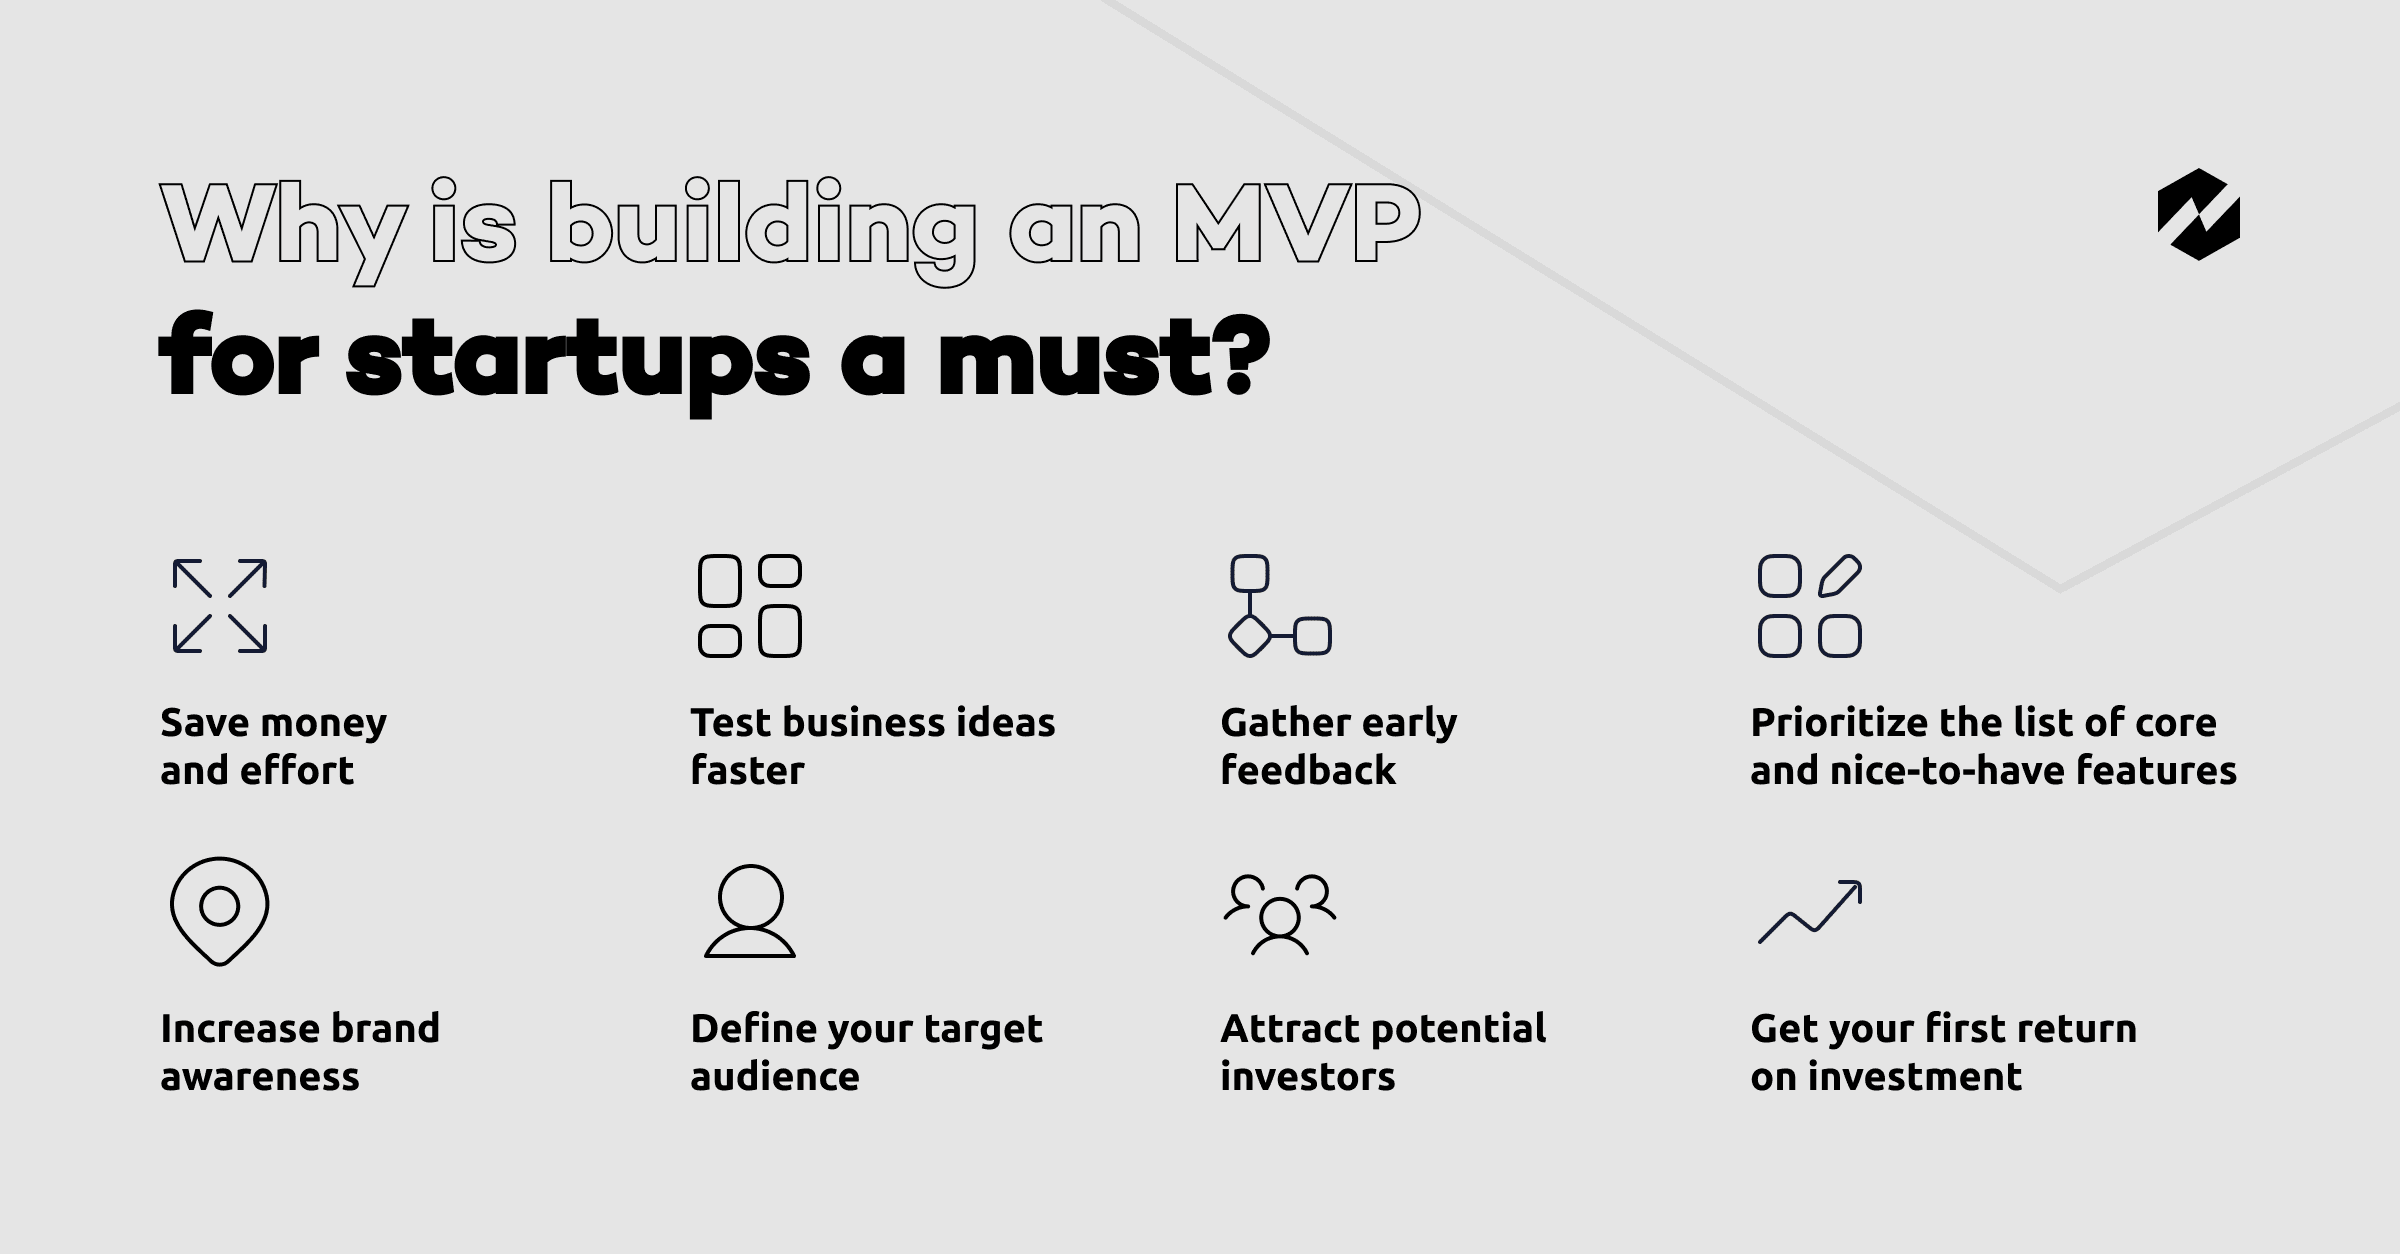 building an MVP for startups